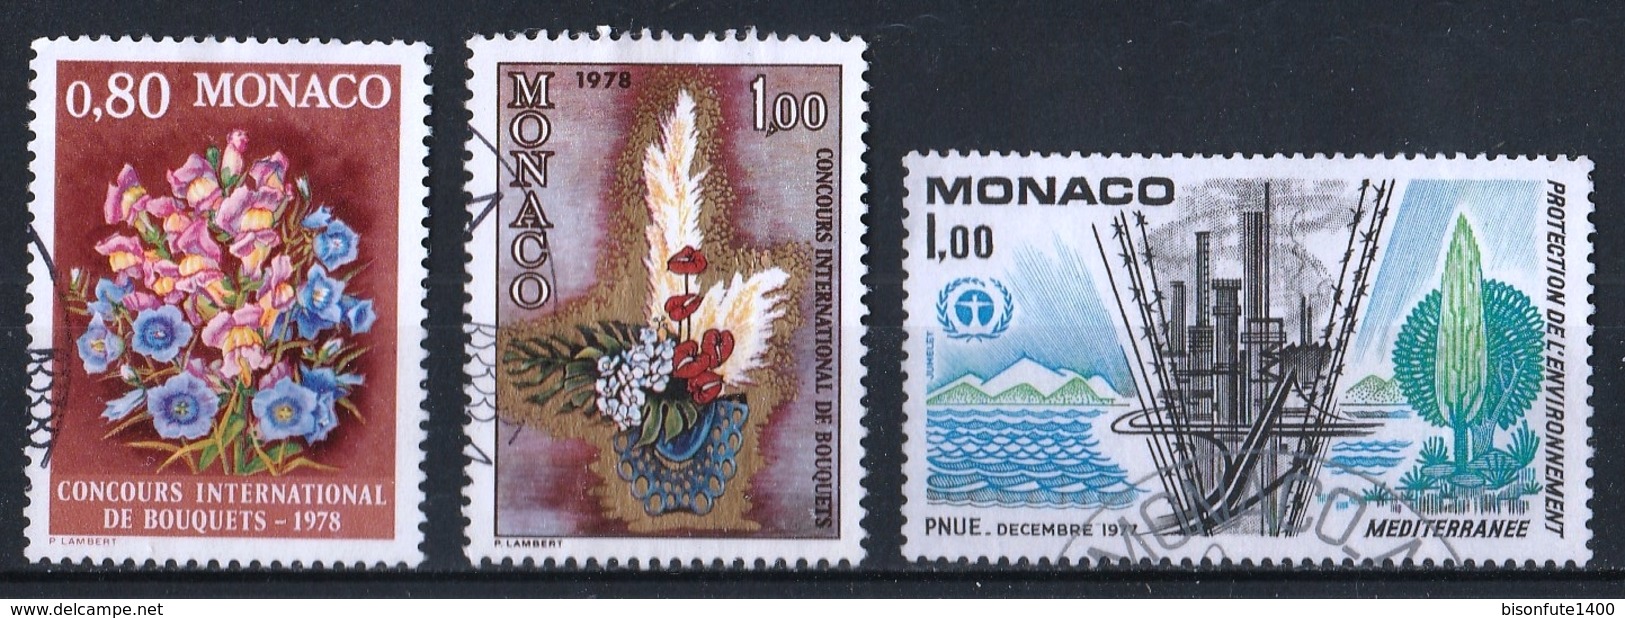 Monaco 1977 : Timbres Yvert & Tellier N° 1115 - 1116 Et 1117. - Usados